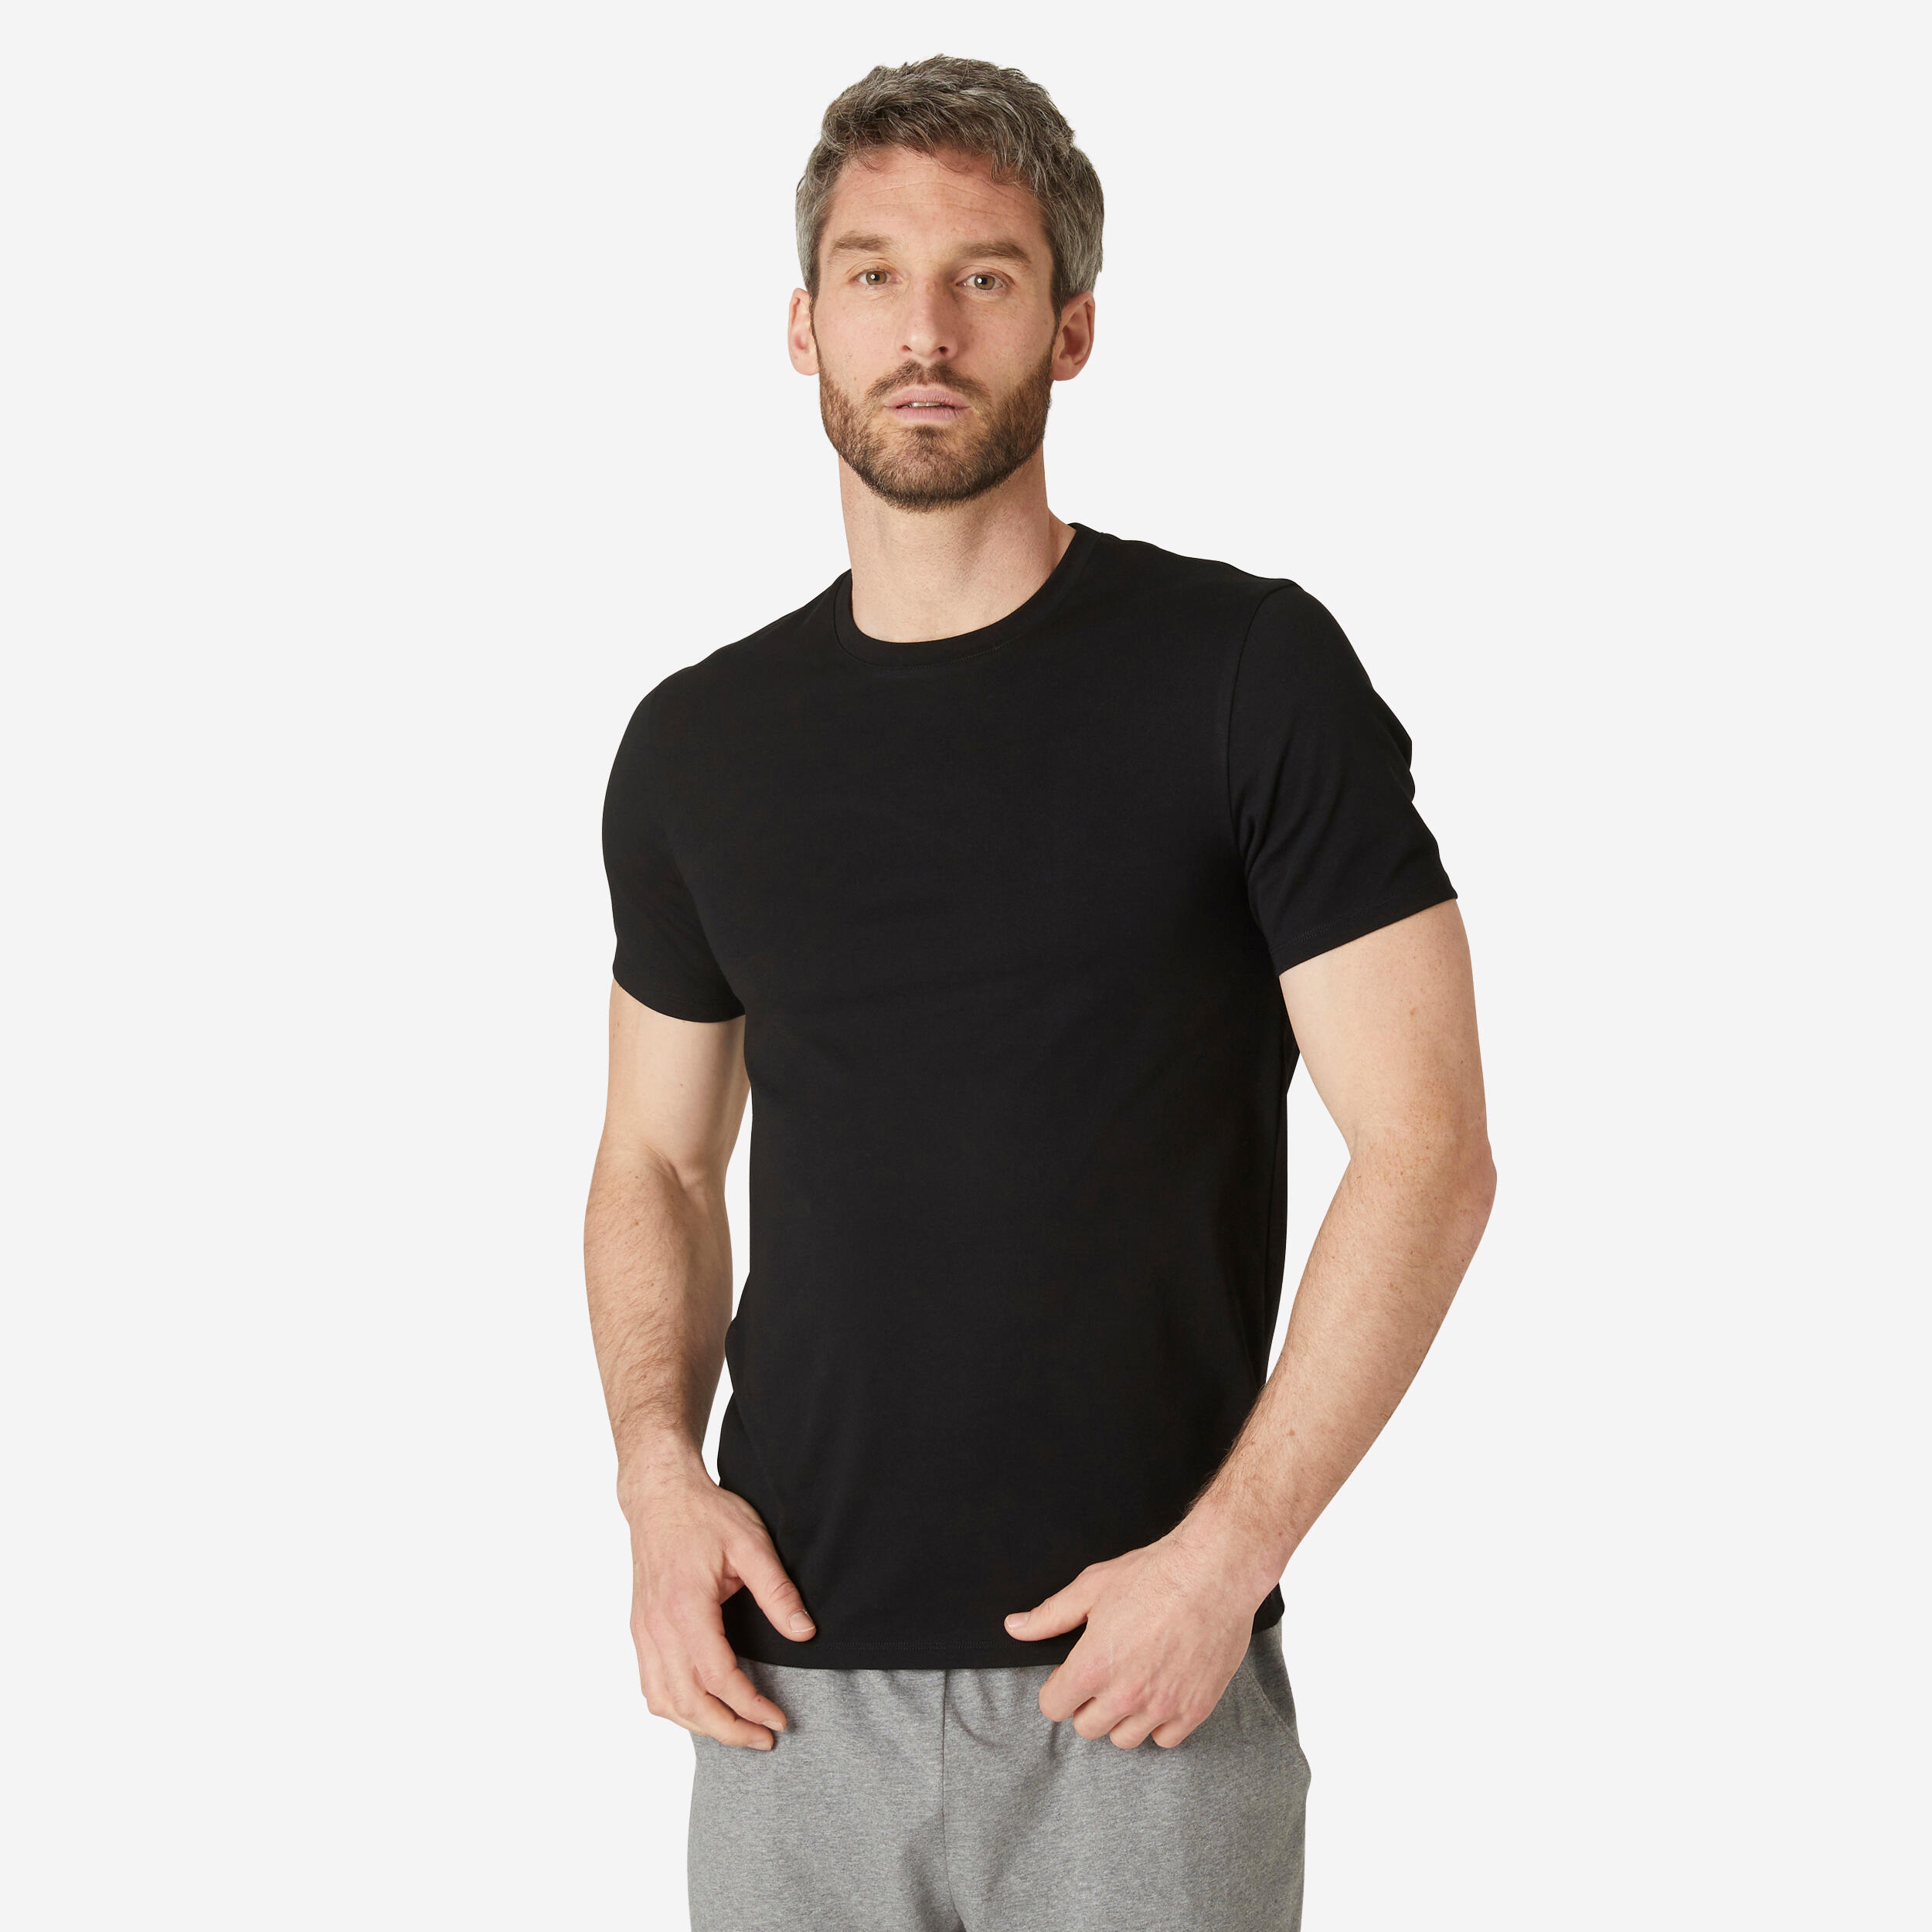 DOMYOS Men's Slim-Fit Fitness T-Shirt 500 - Black